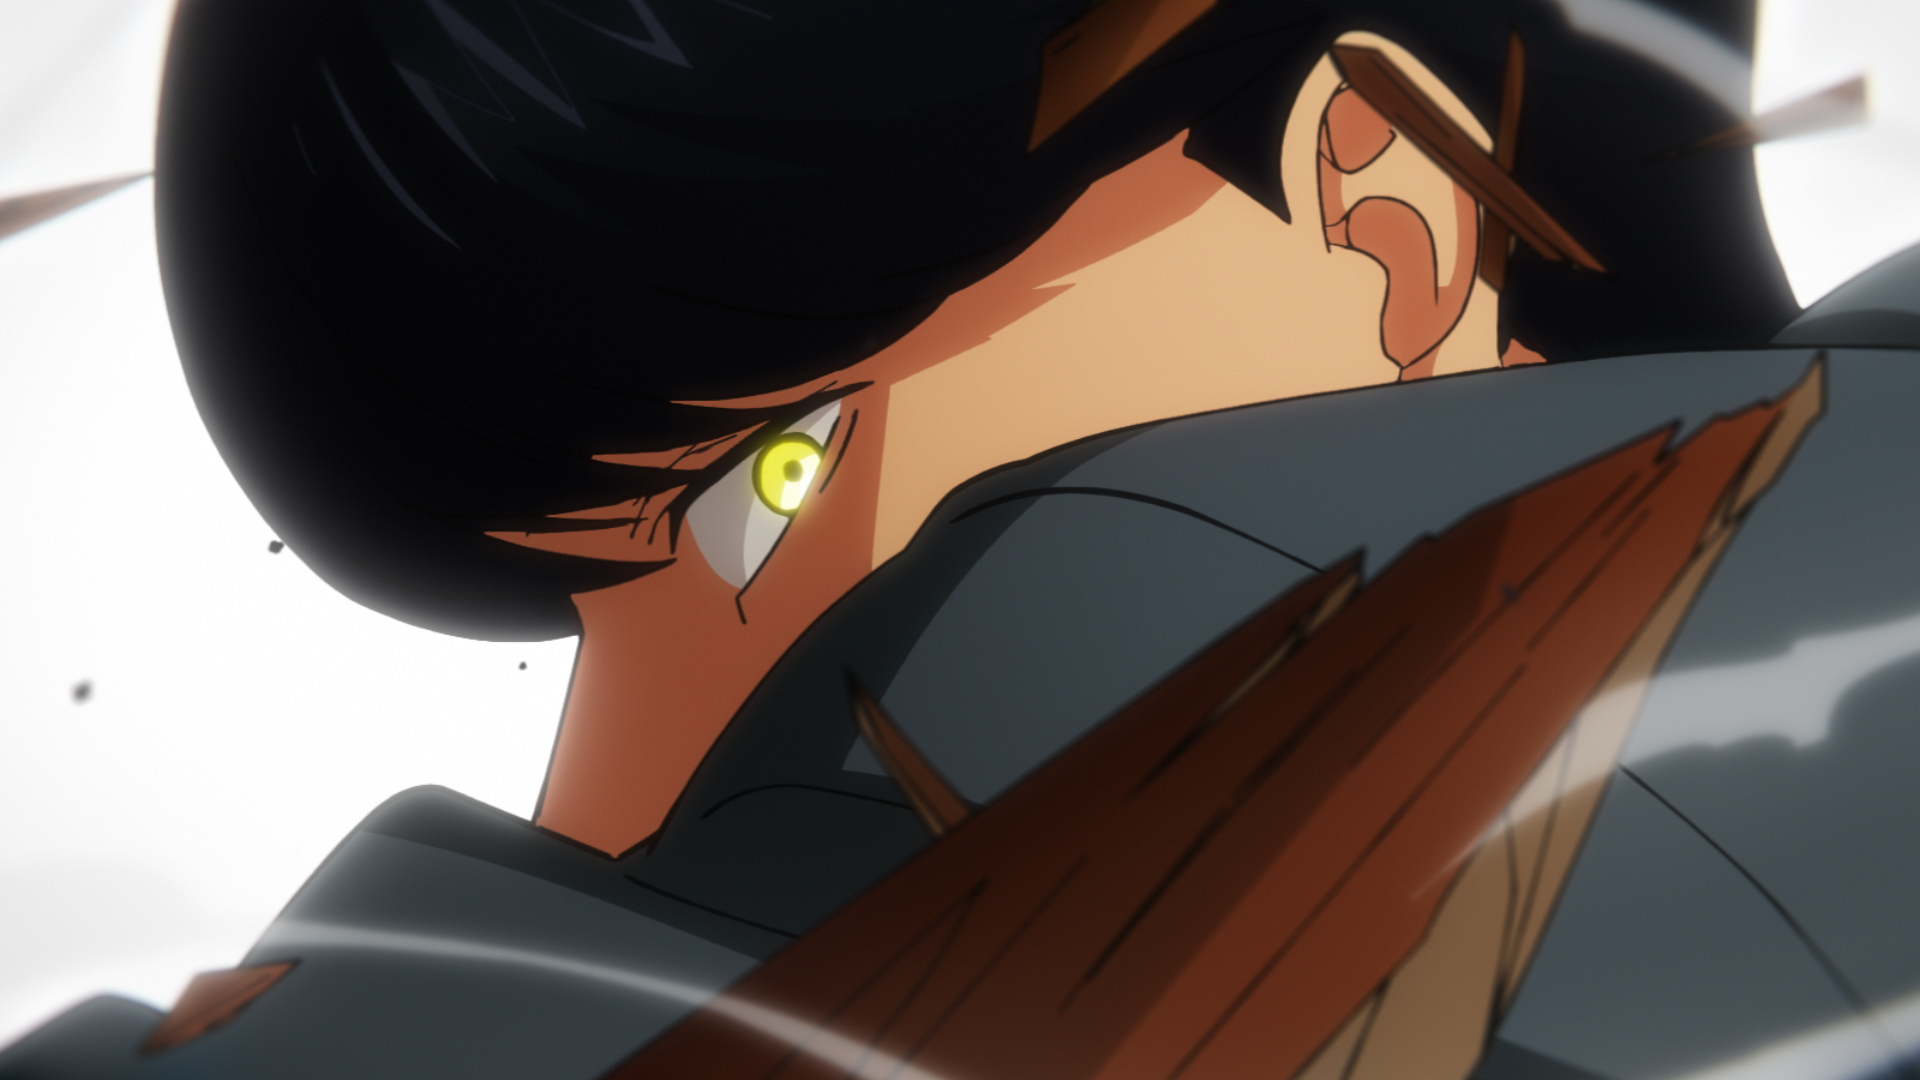 Mashle Episode 2 Reveals Preview Images, Staff - Anime Corner